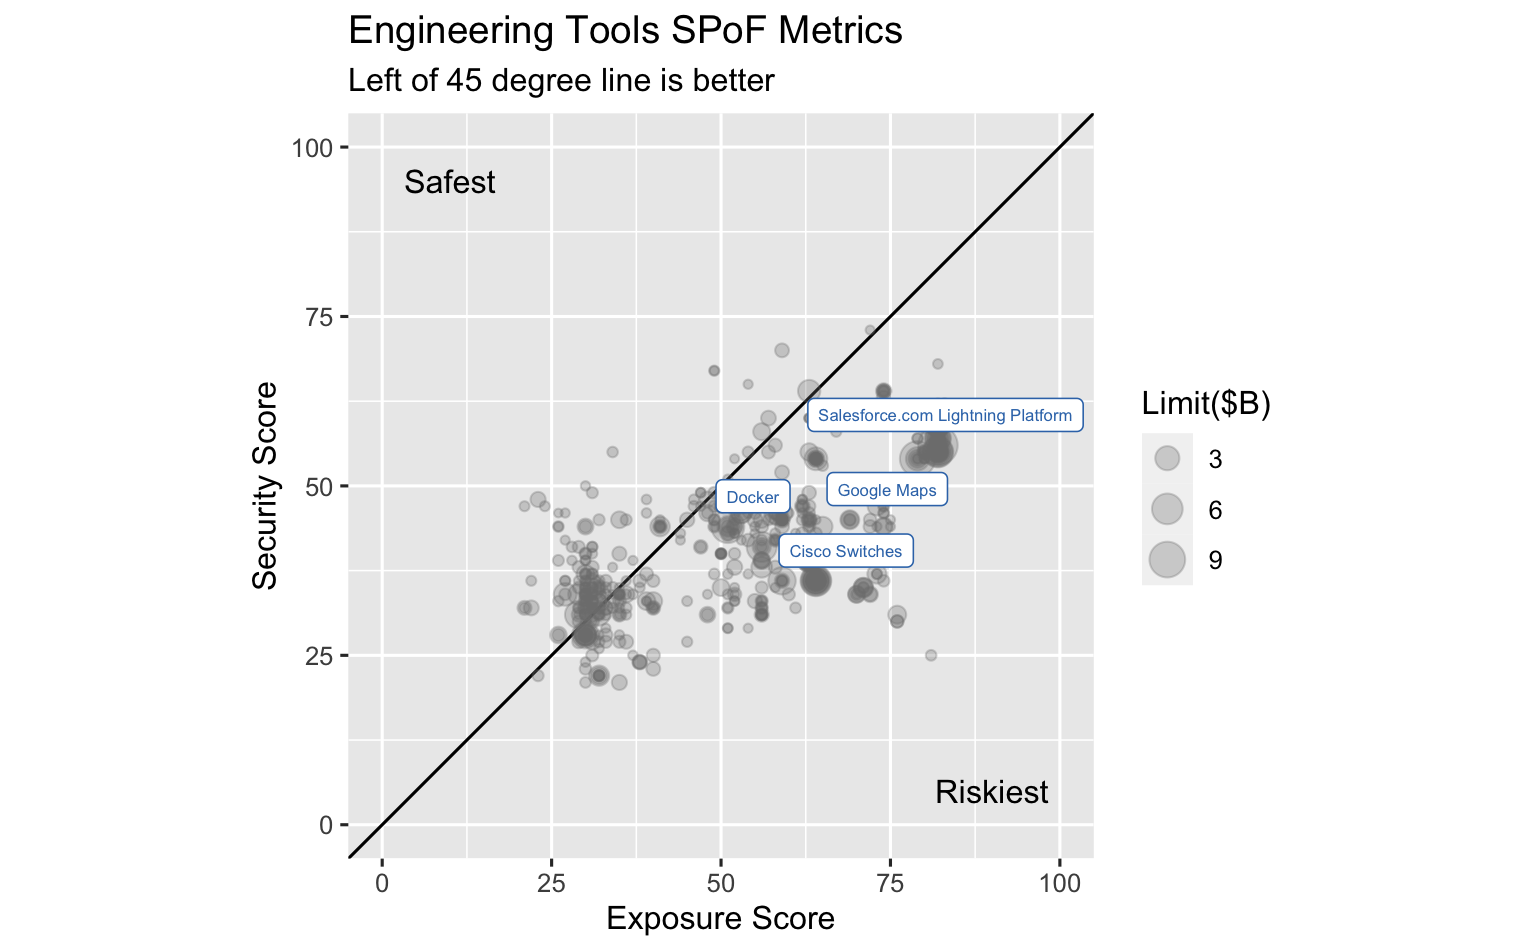 Engineering Tools SPoF metrics